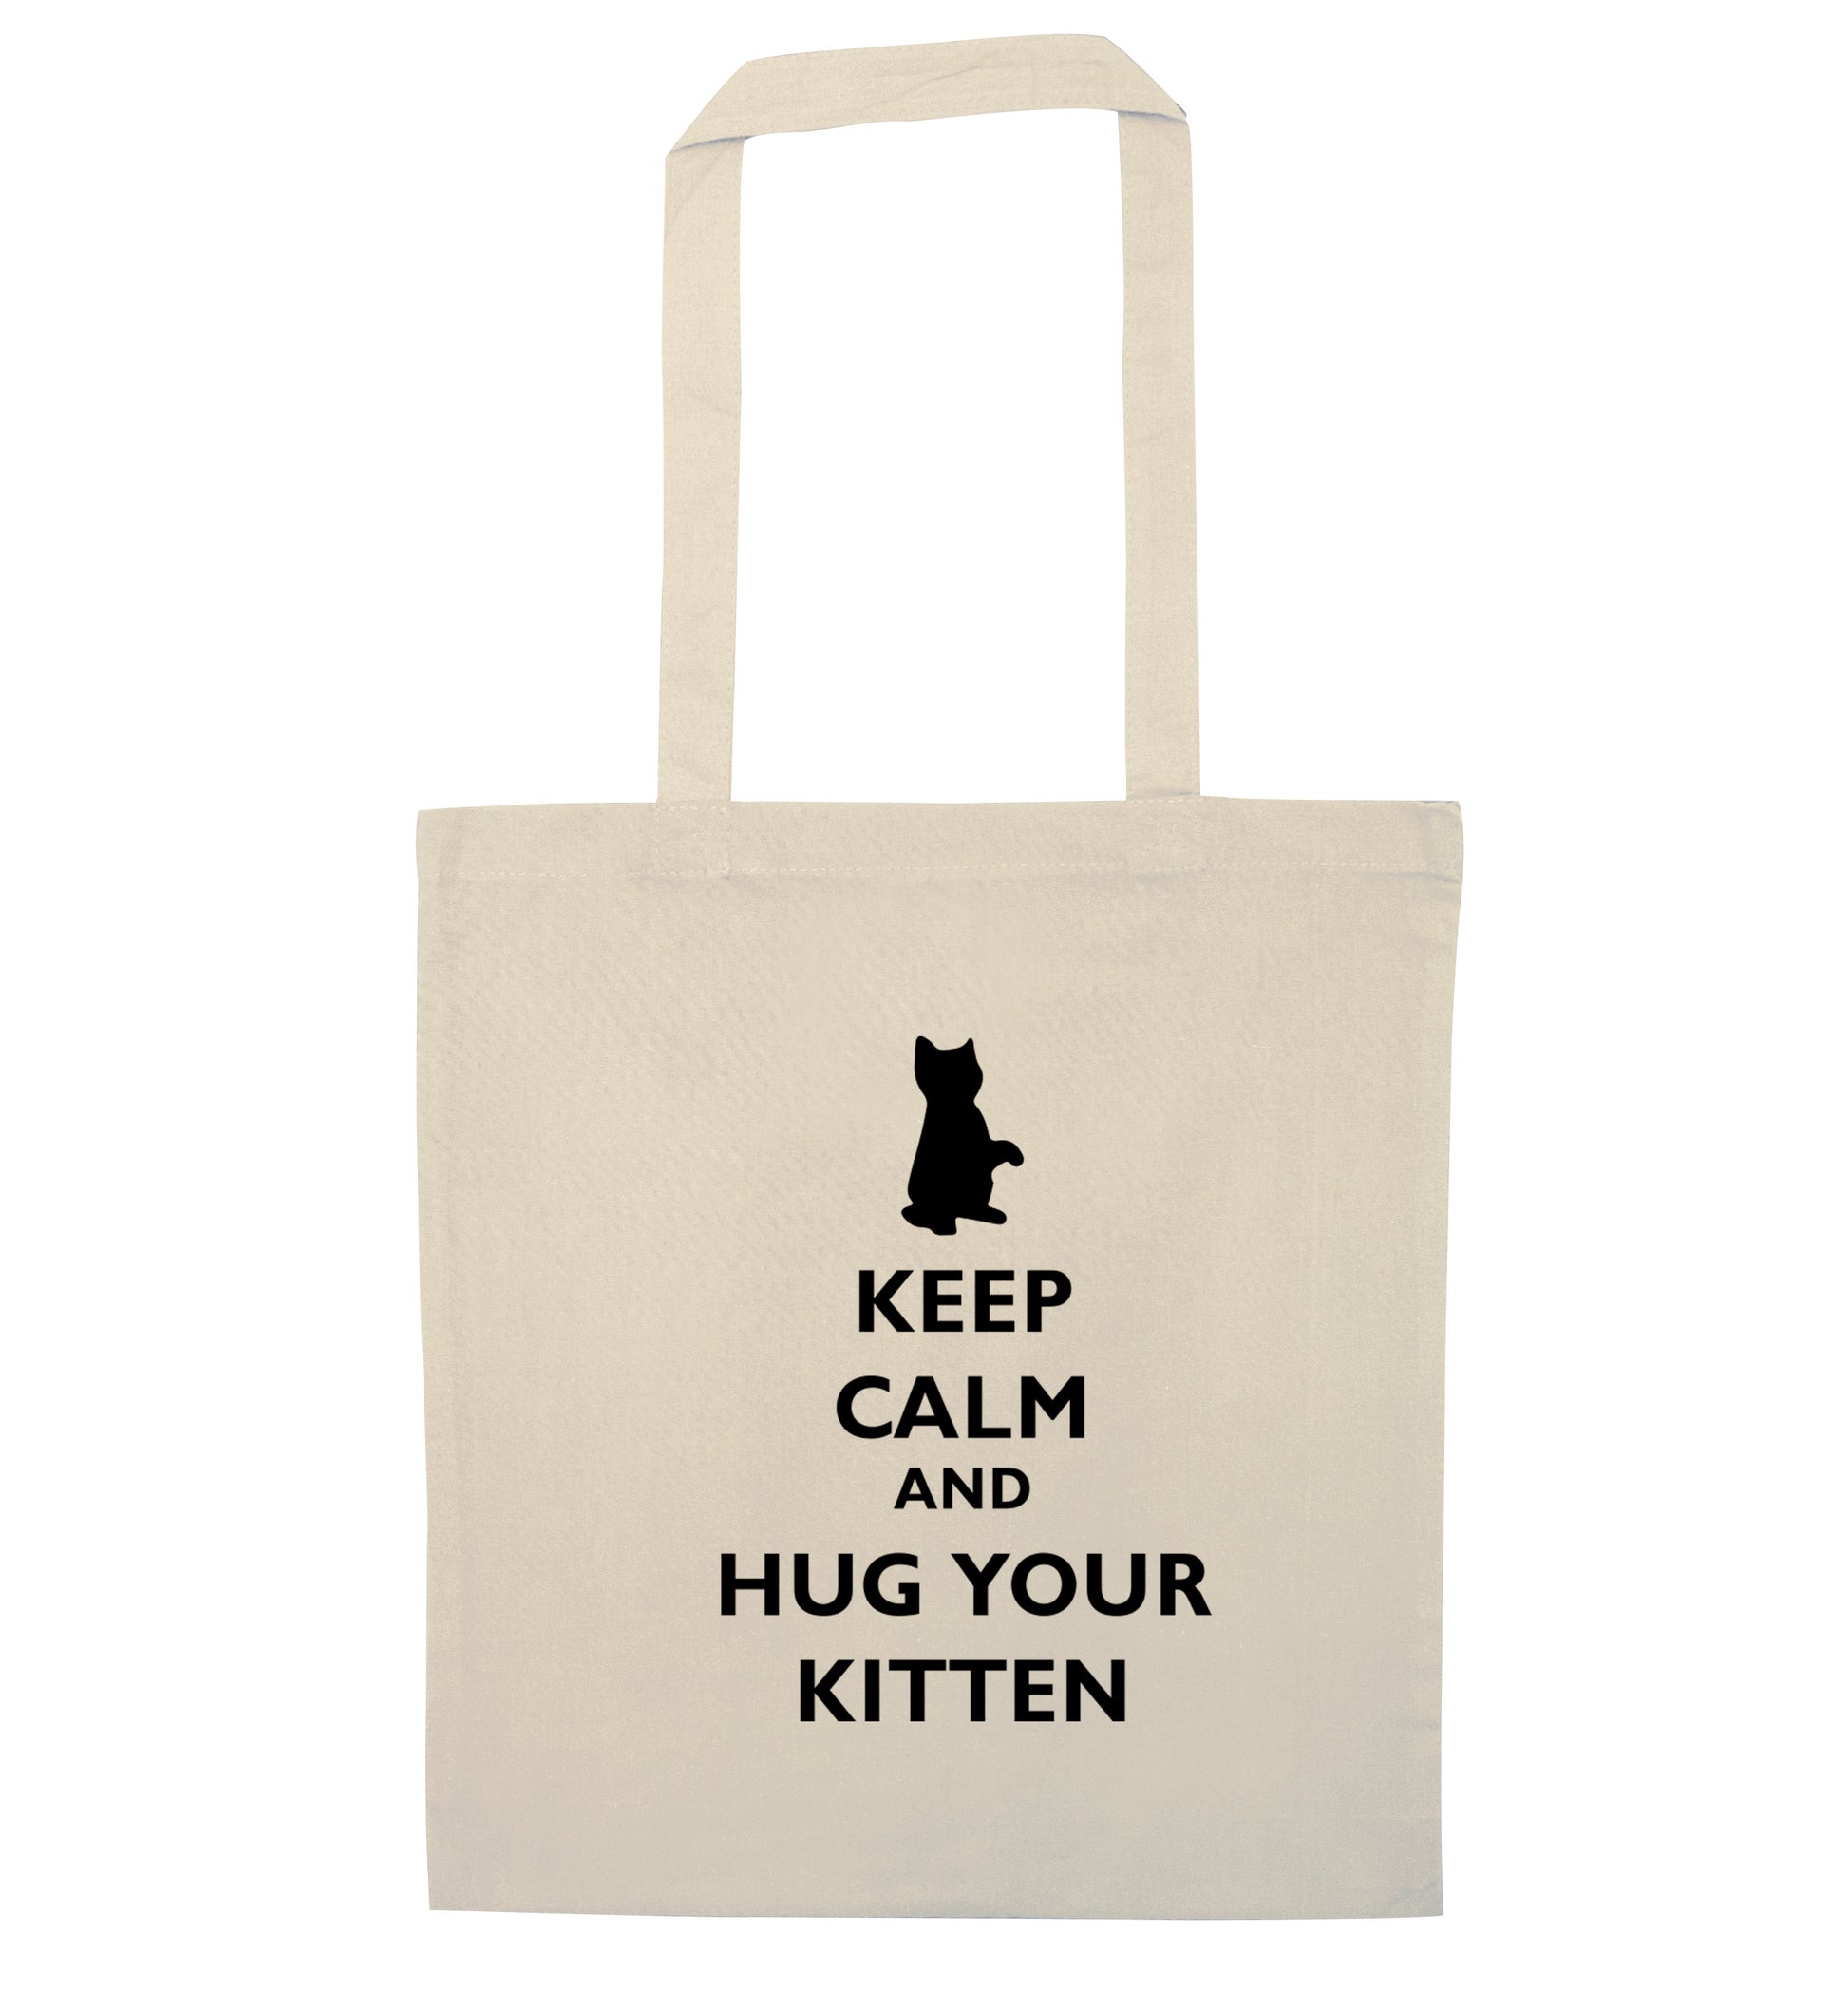 Keep calm and hug your kitten natural tote bag